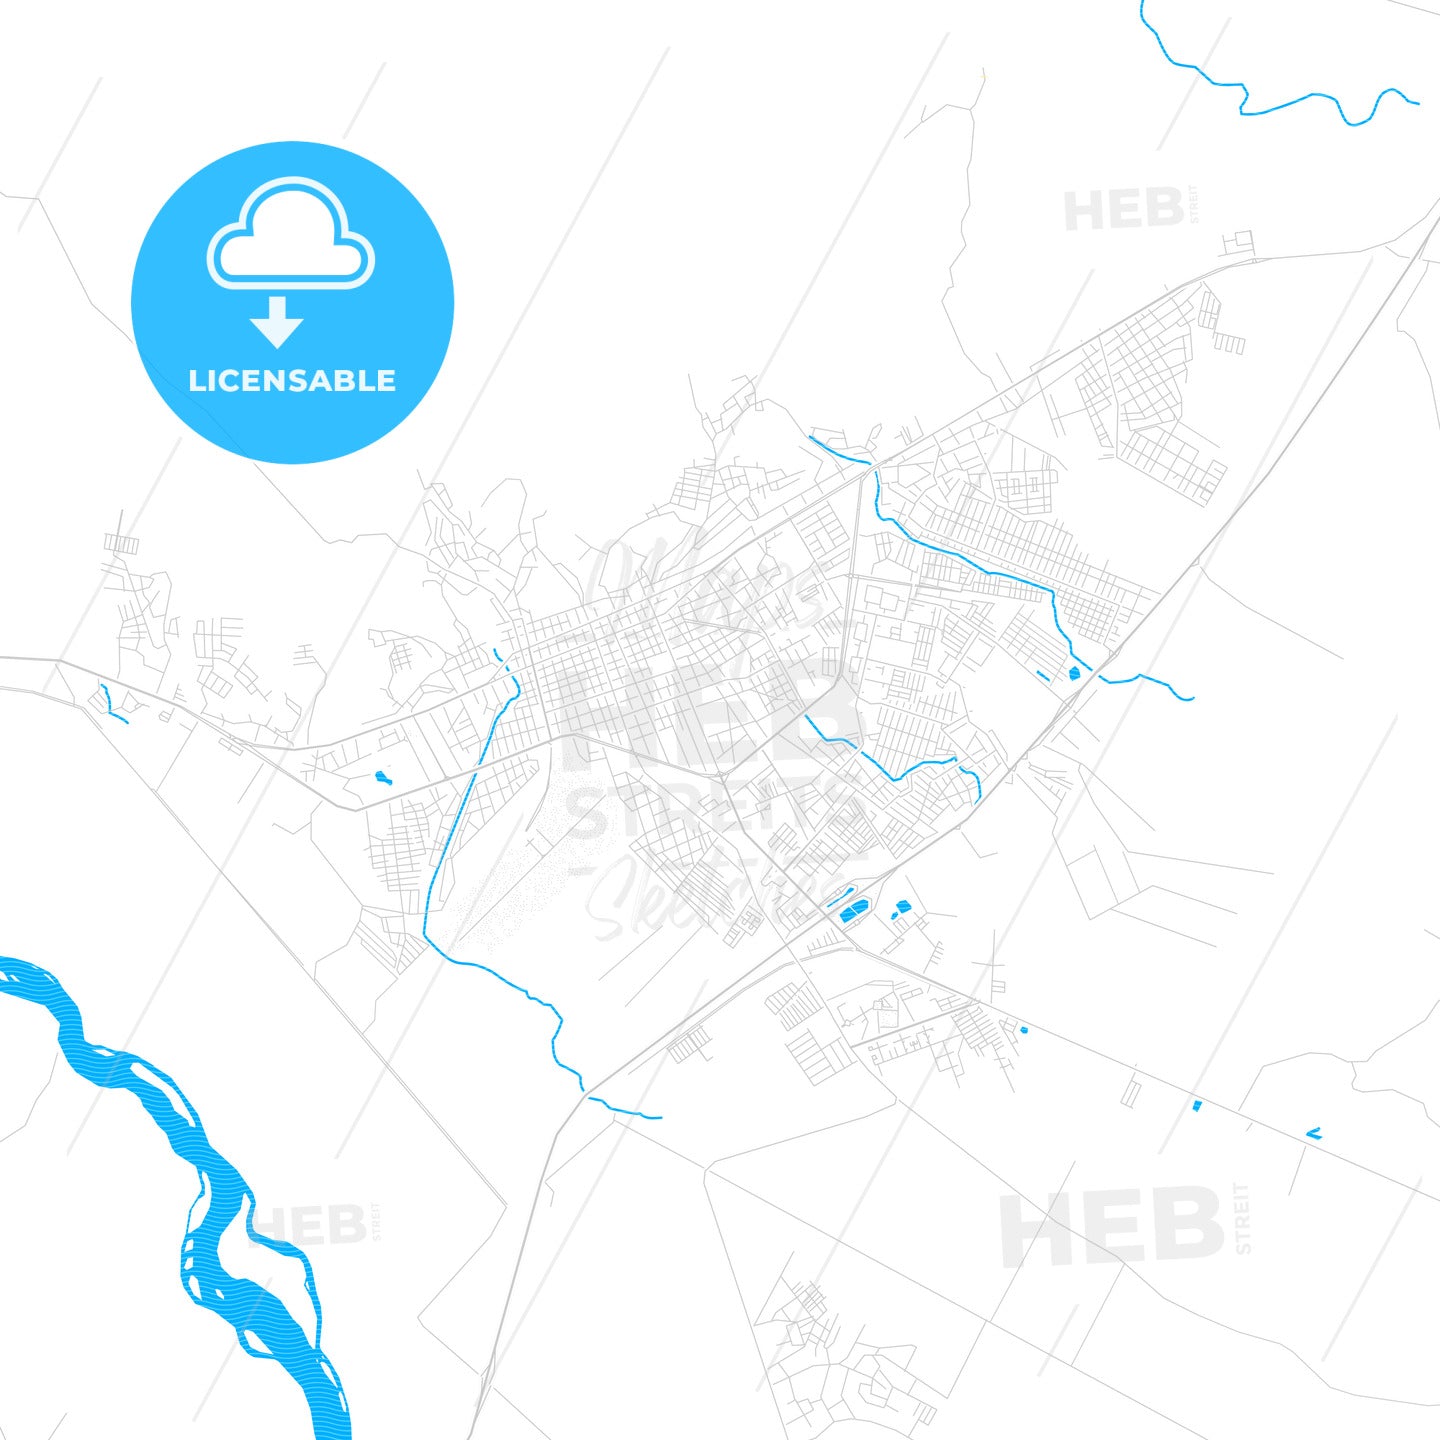 Guanare, Venezuela PDF vector map with water in focus